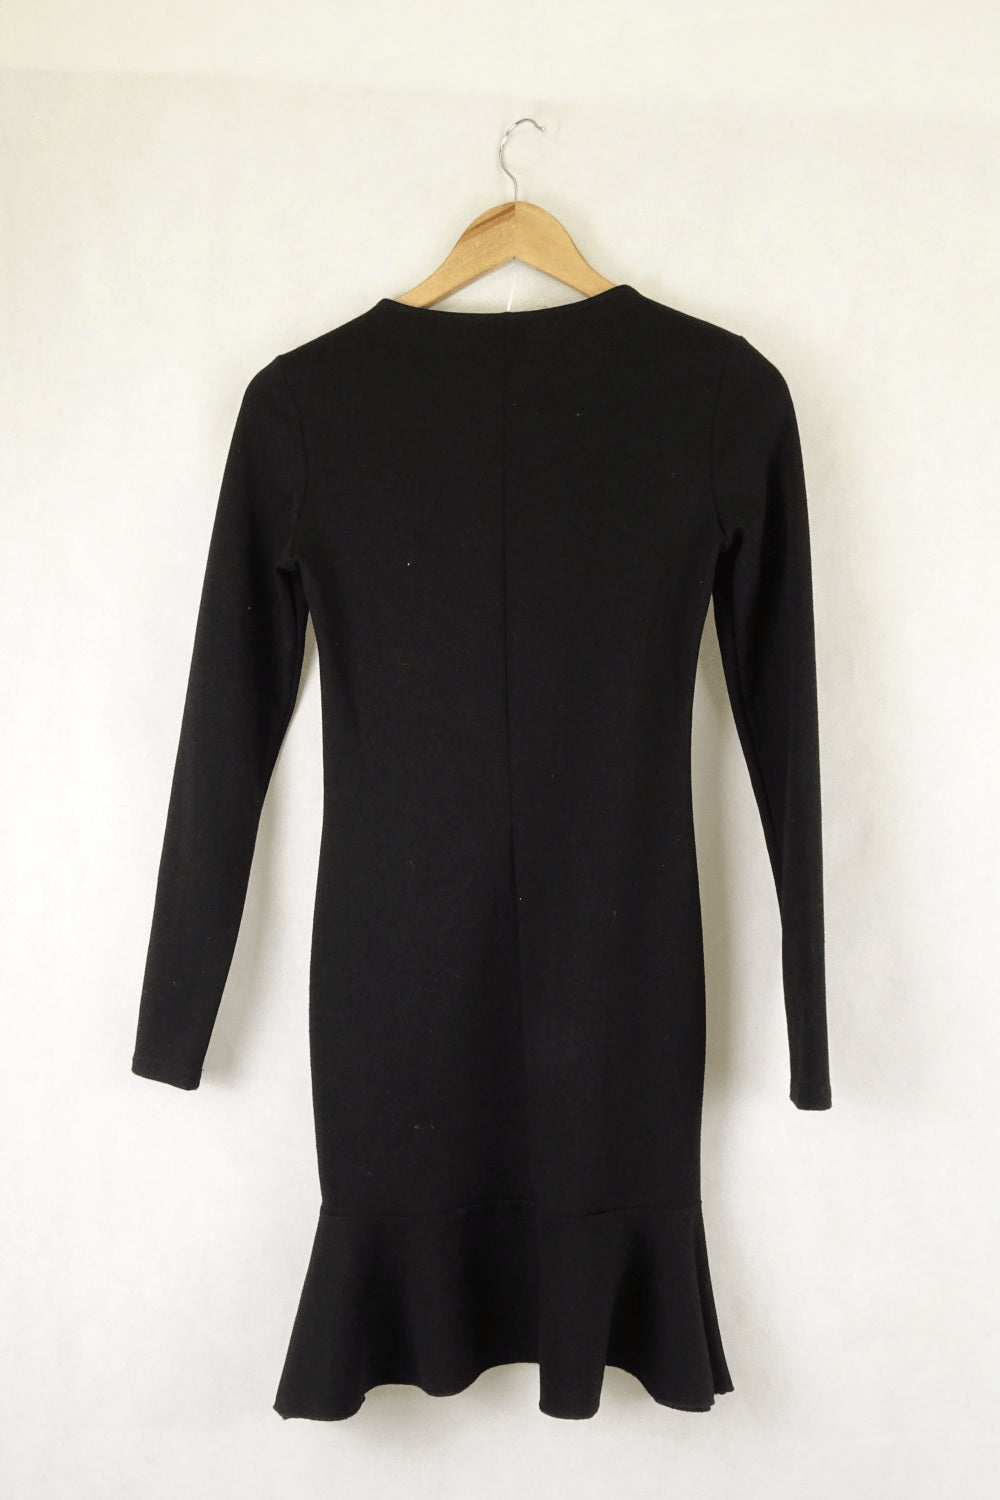 Asos Black Dress 8